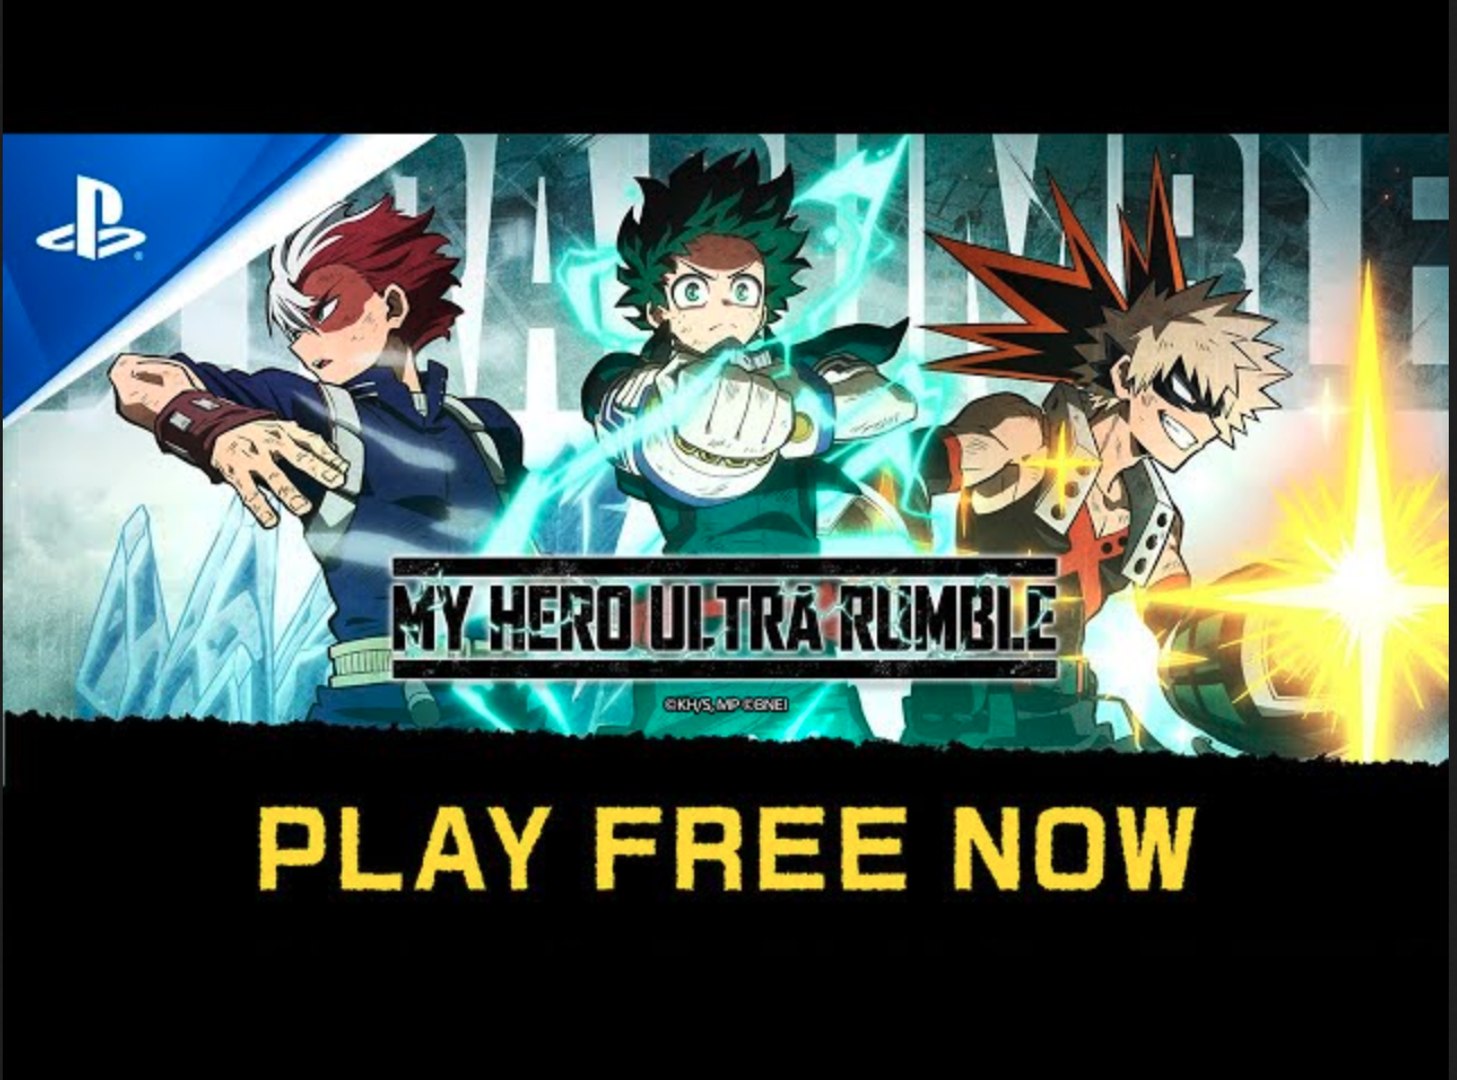 My Hero Academia Is Getting A Battle Royale!? - My Hero Ultra Rumble  Trailer 